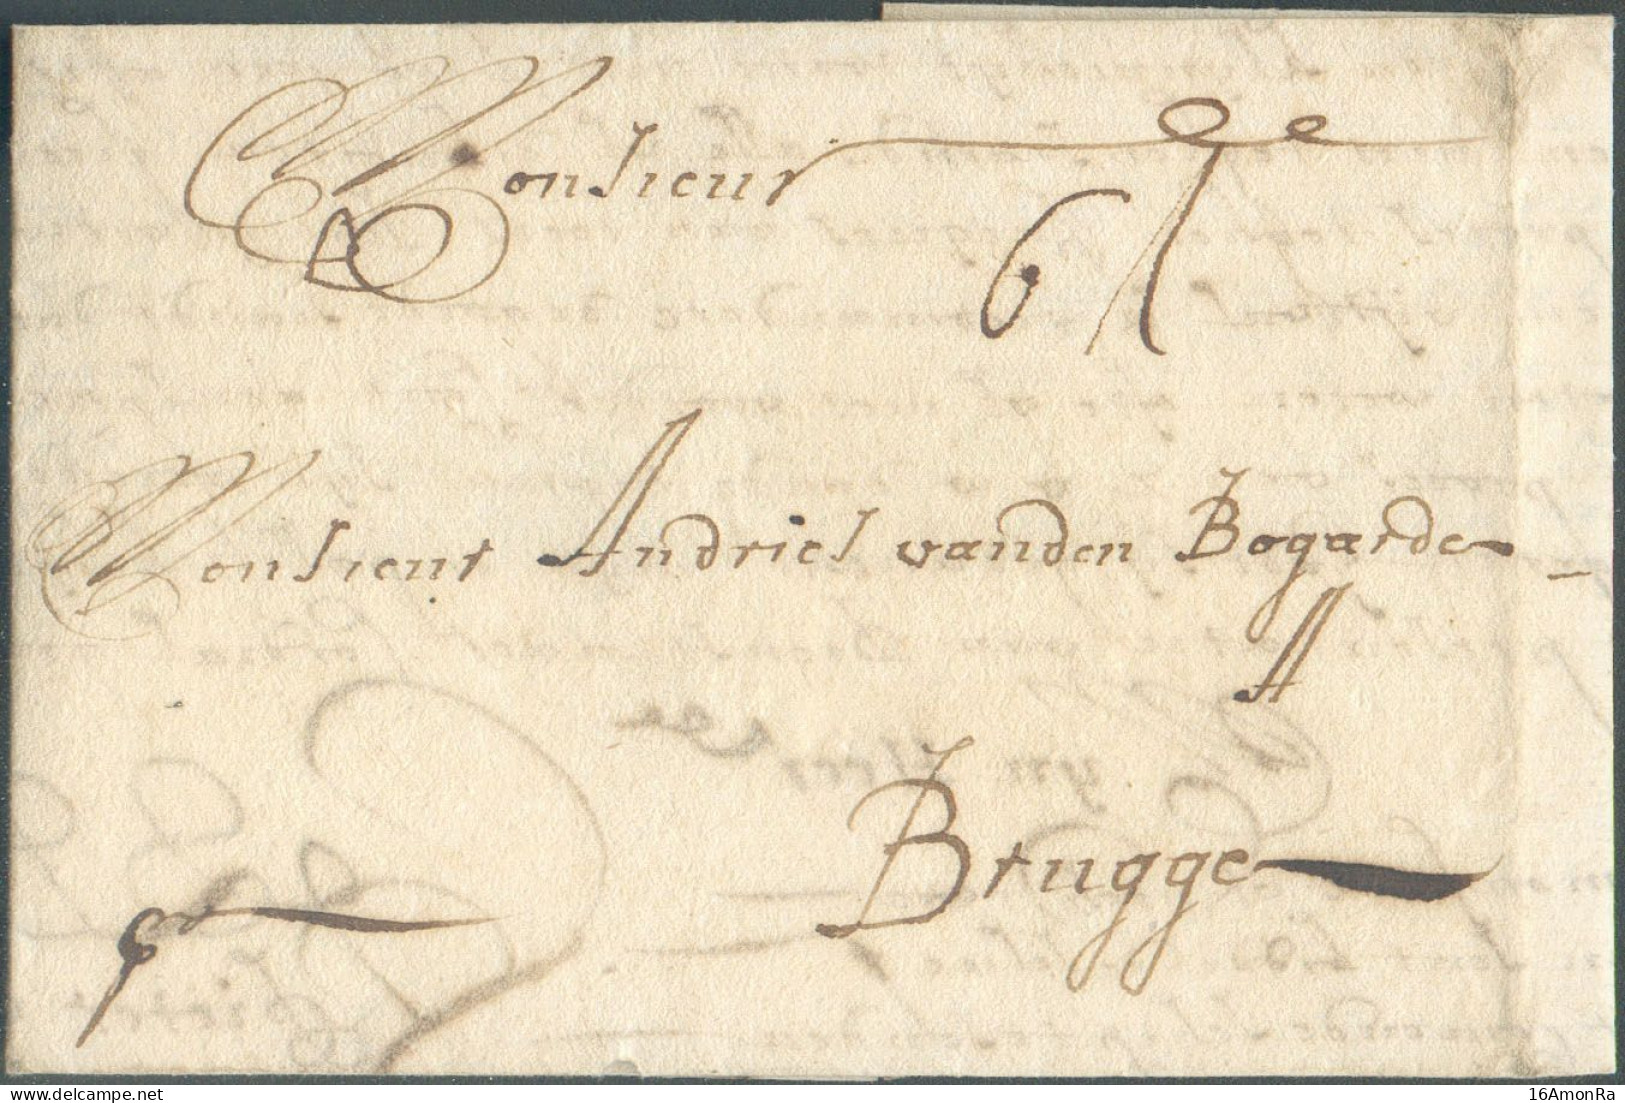 LAC De LONDON Le 23 Octobre 1699 Vers BRUGGE; Port '6' Shillings.  Superbe - 21367 - 1621-1713 (Spanish Netherlands)